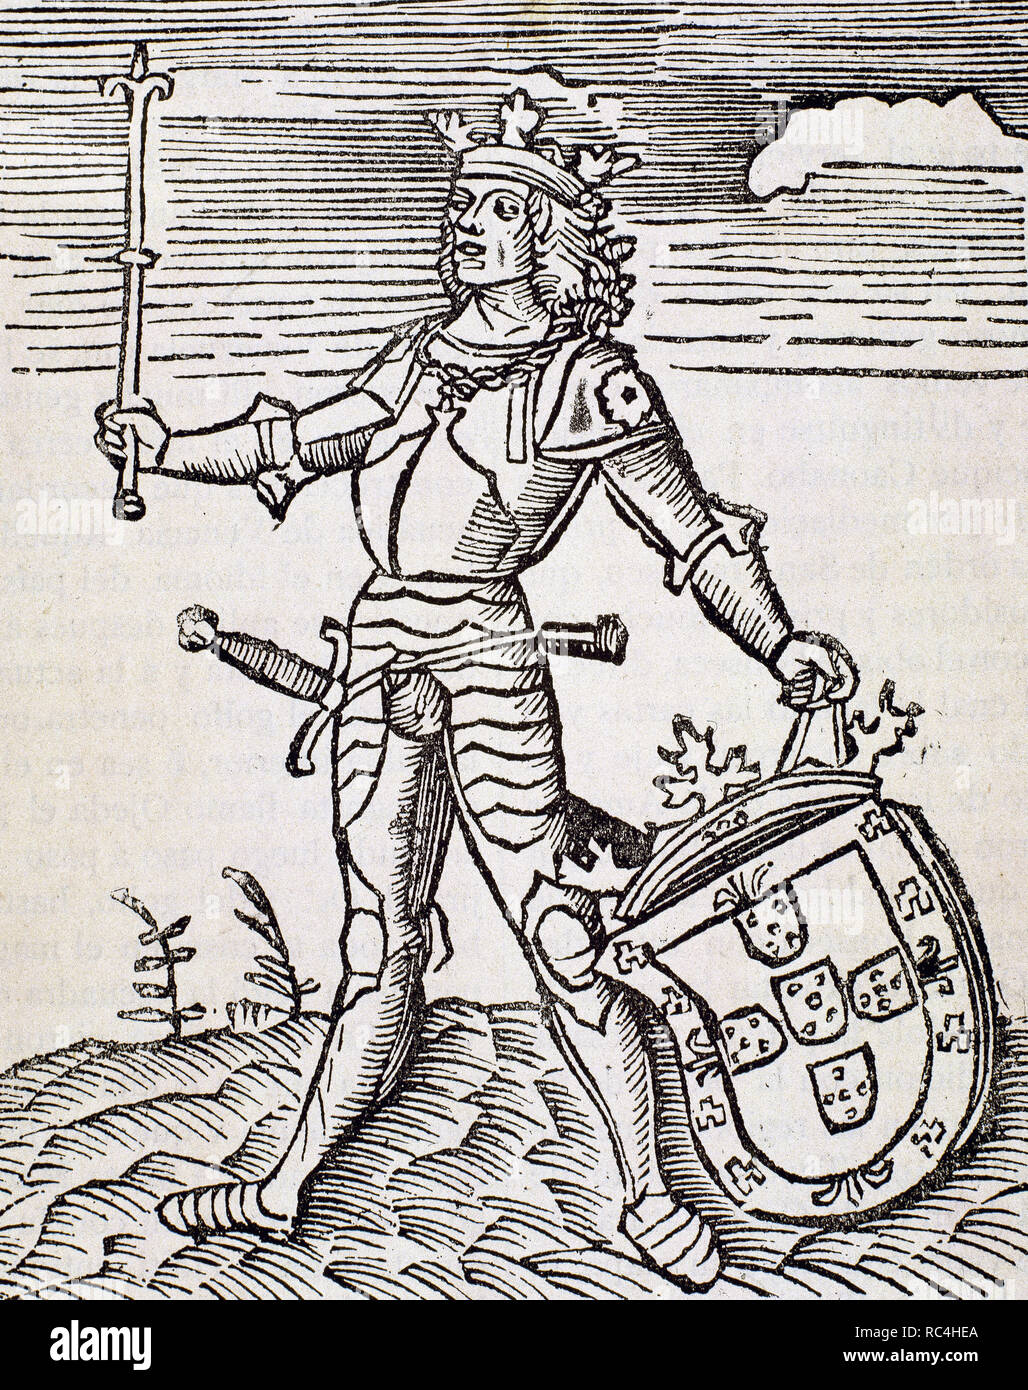 Vespucci, Amerigo (1454-1512). Italian navigator, explorer and cartographer. Engraving. Stock Photo